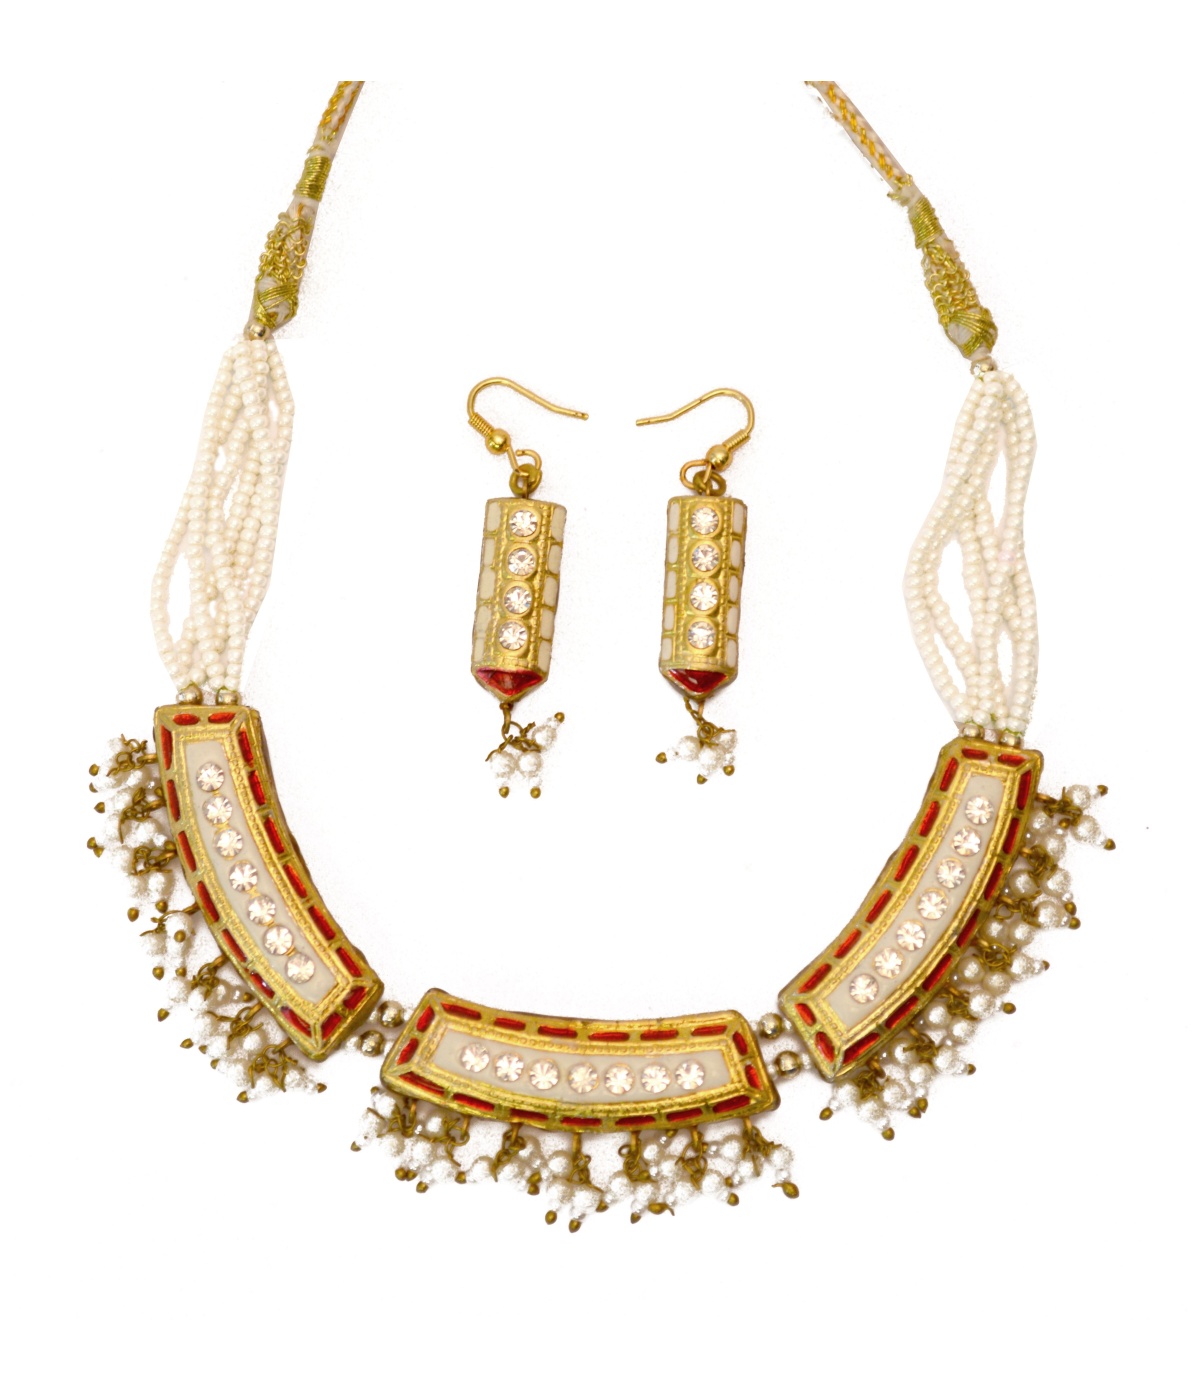  White Indian Jewelry Set